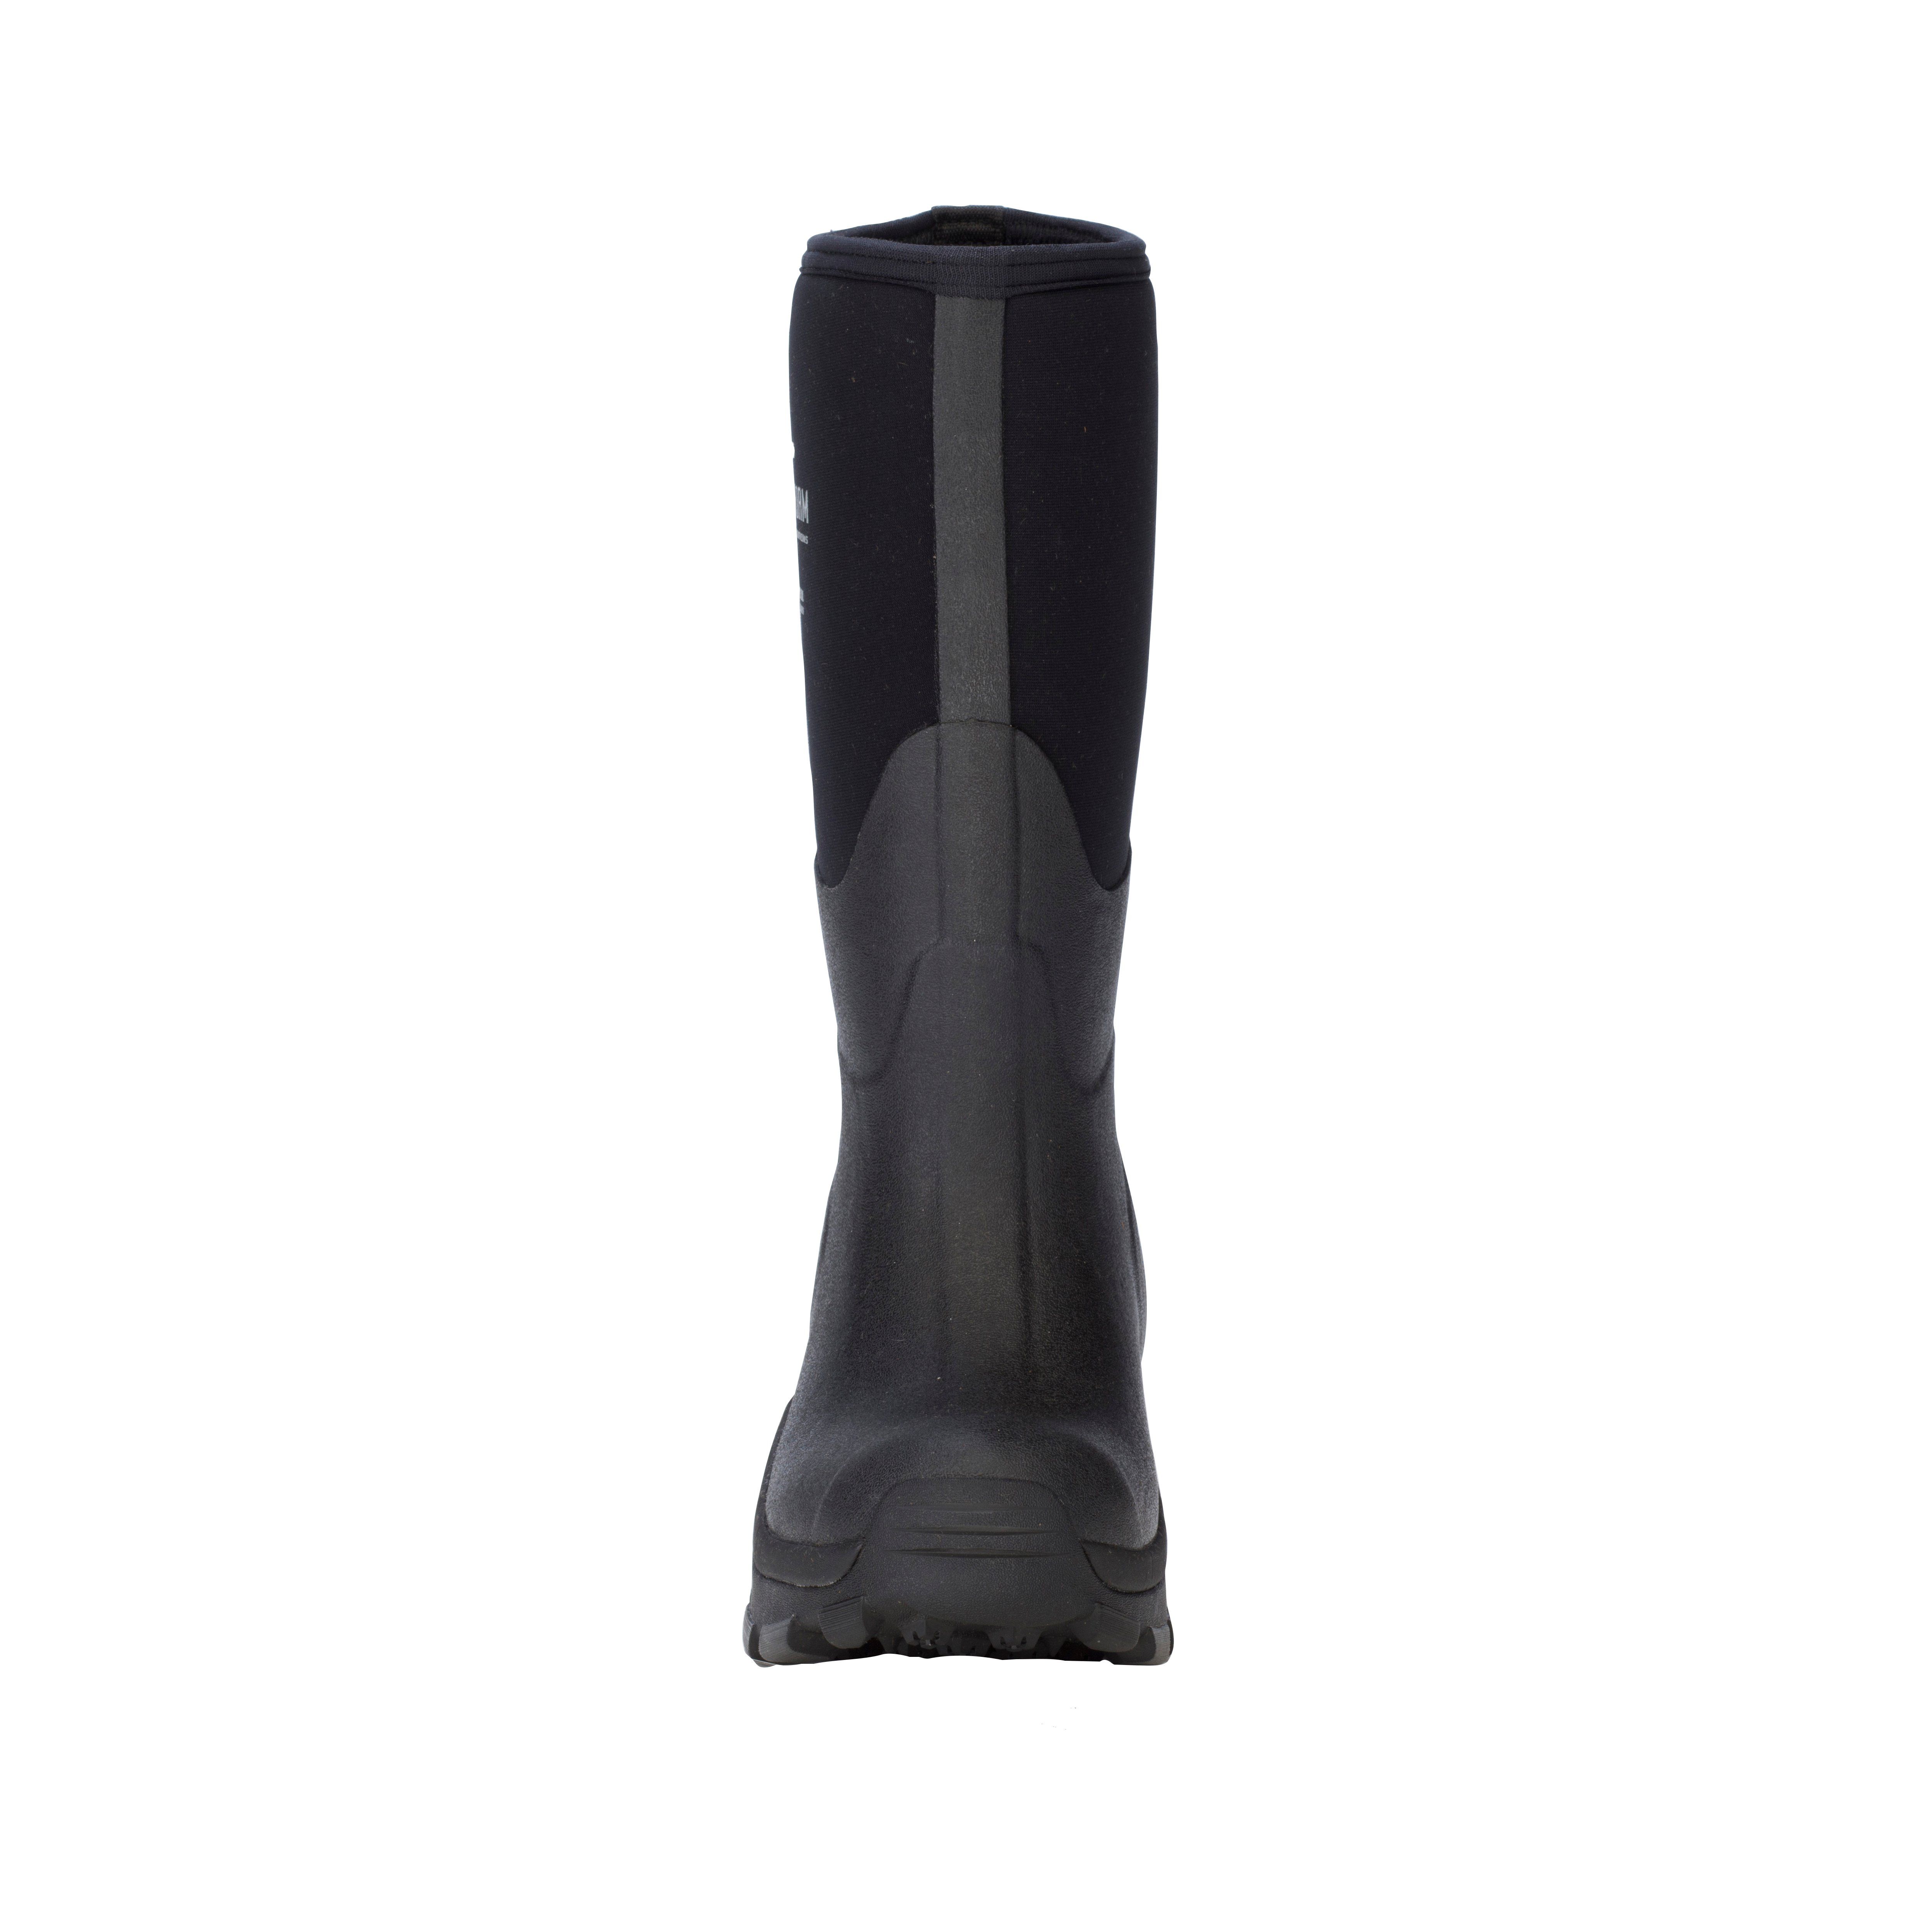 DRYSHOD Women's Arctic Storm Hi Size 8 Black/Grey Waterproof Insulated Boots